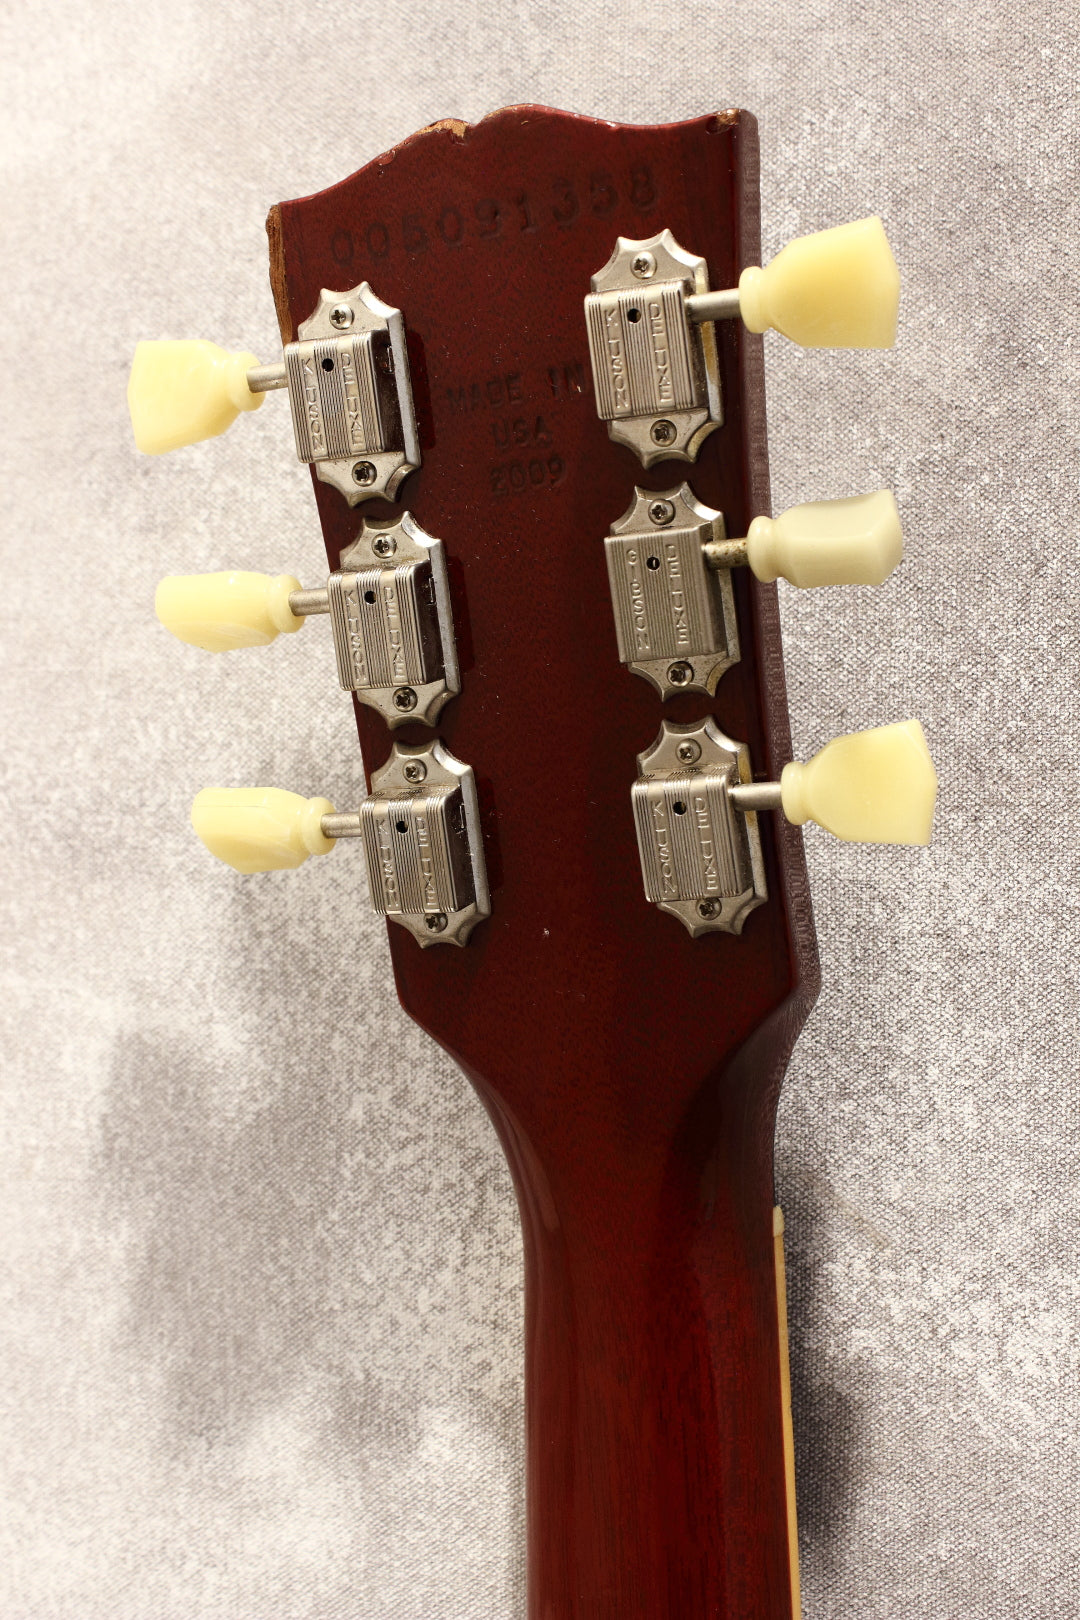 Gibson SG Standard Heritage Cherry 2009